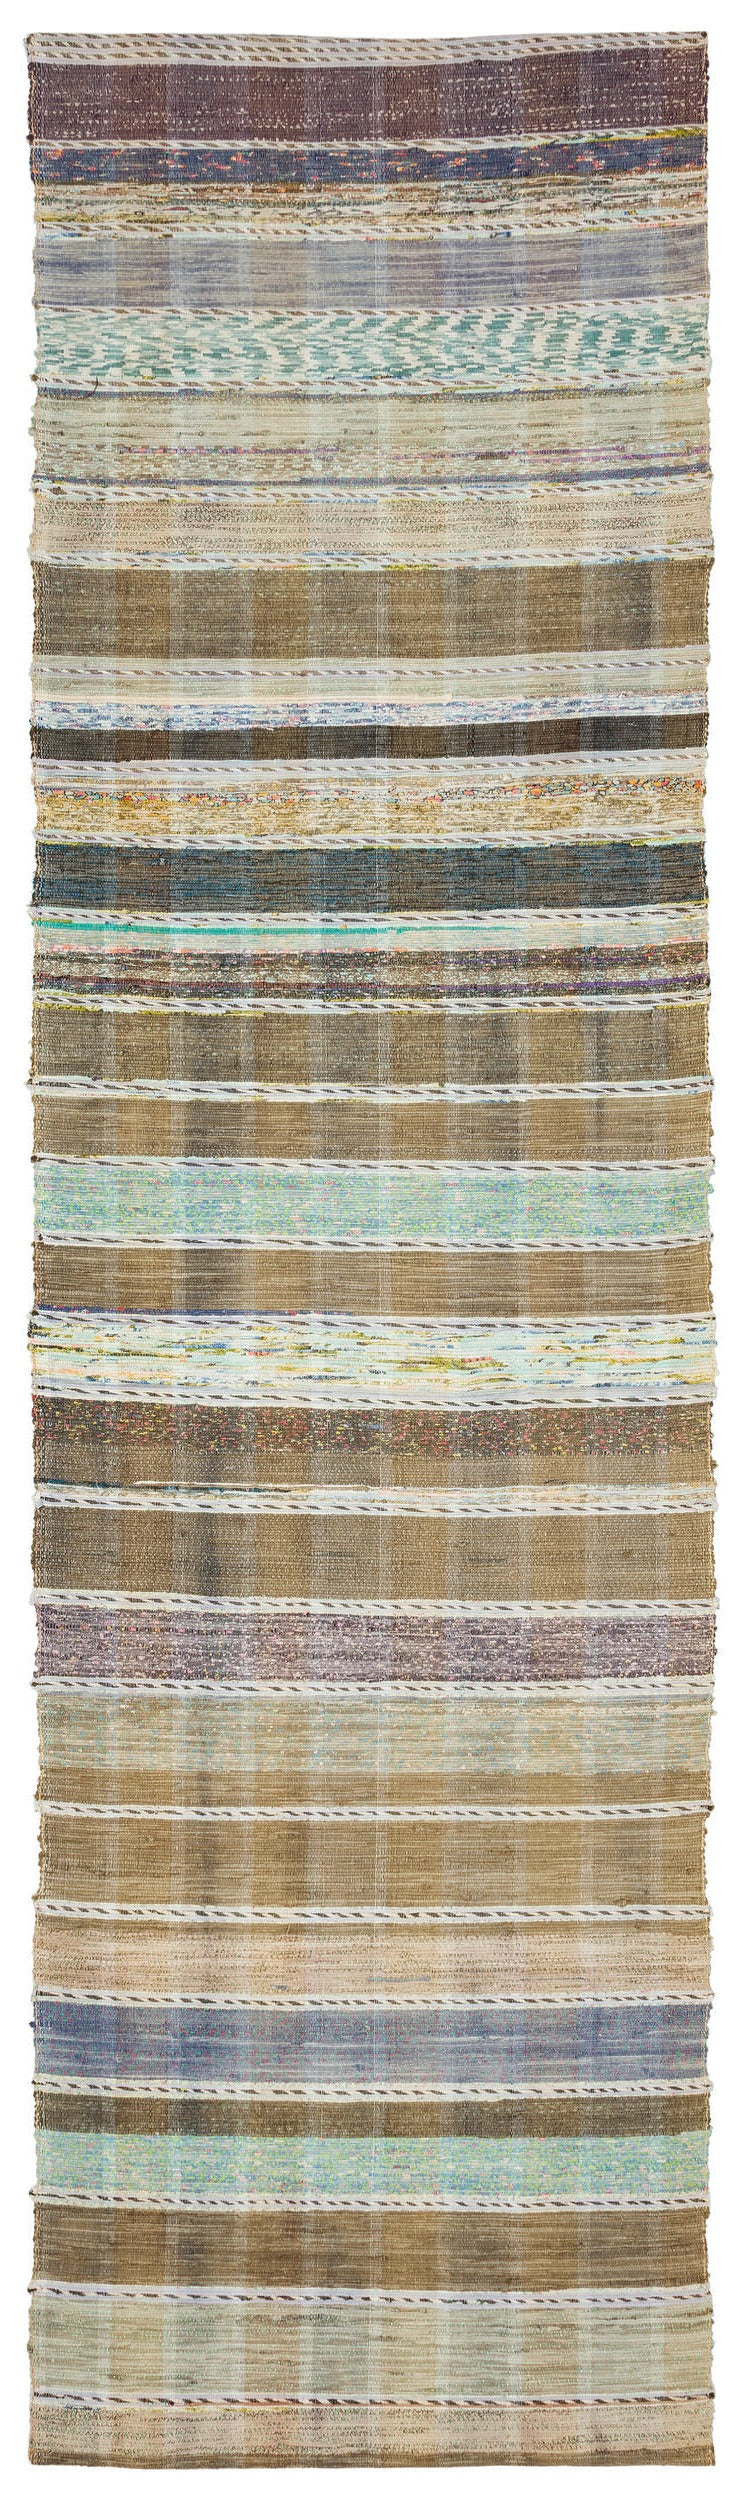 Cretan Beige Striped Wool Hand-Woven Carpet 101 x 357